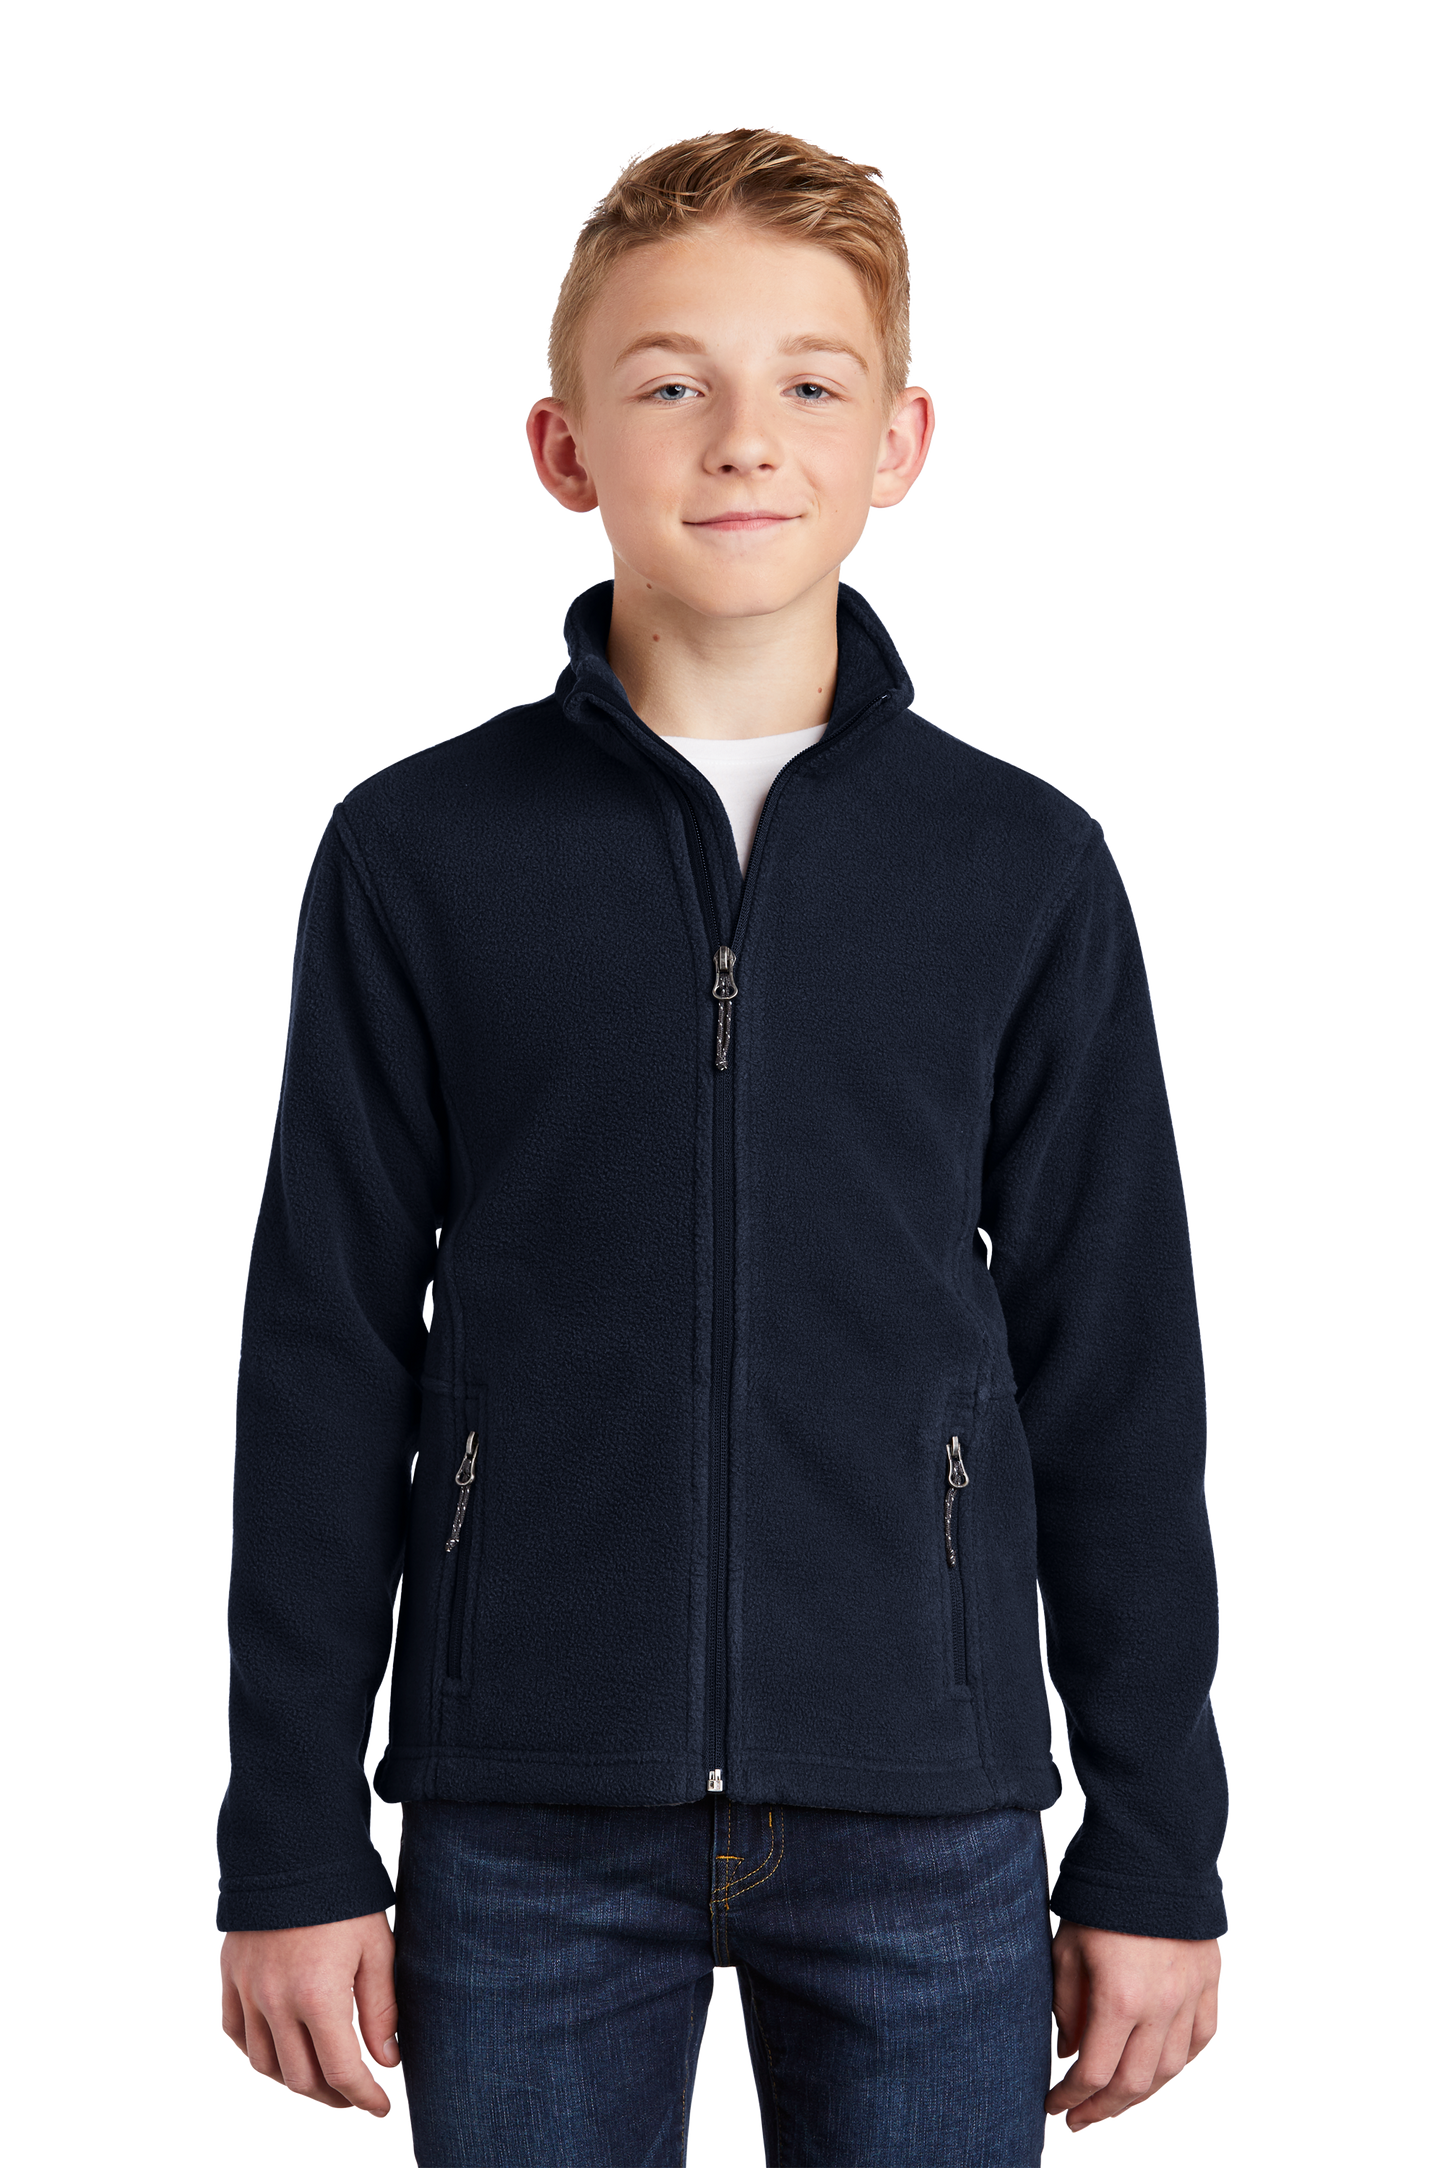 Youth Port Authority Value Fleece Jacket